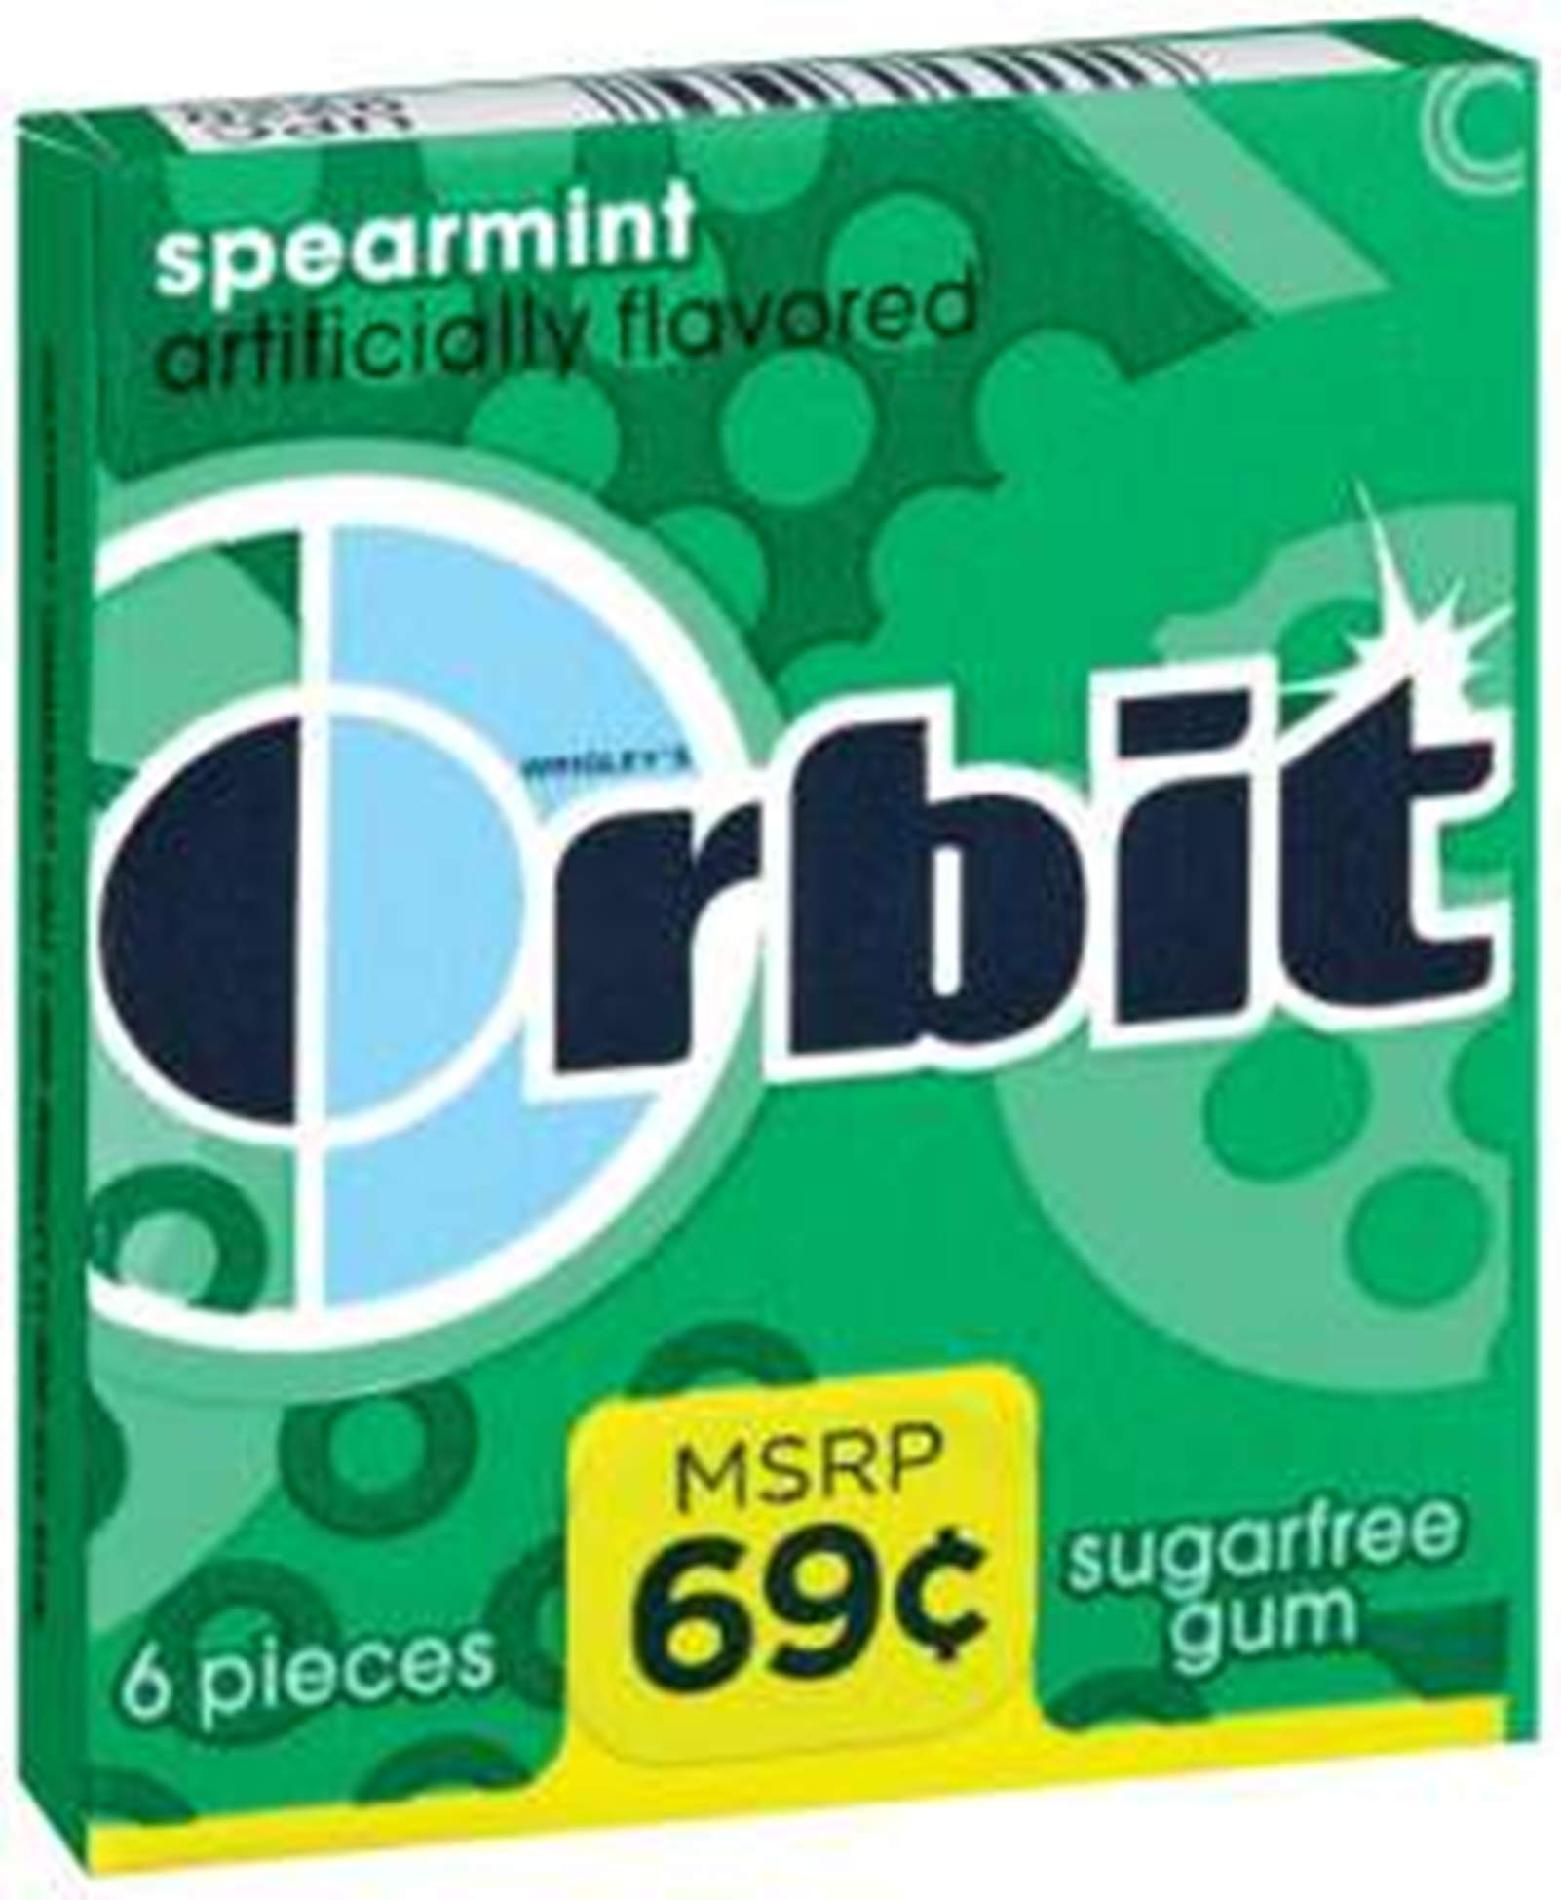 Orbit Spearmint Sugarfree Gum, 6 Pieces